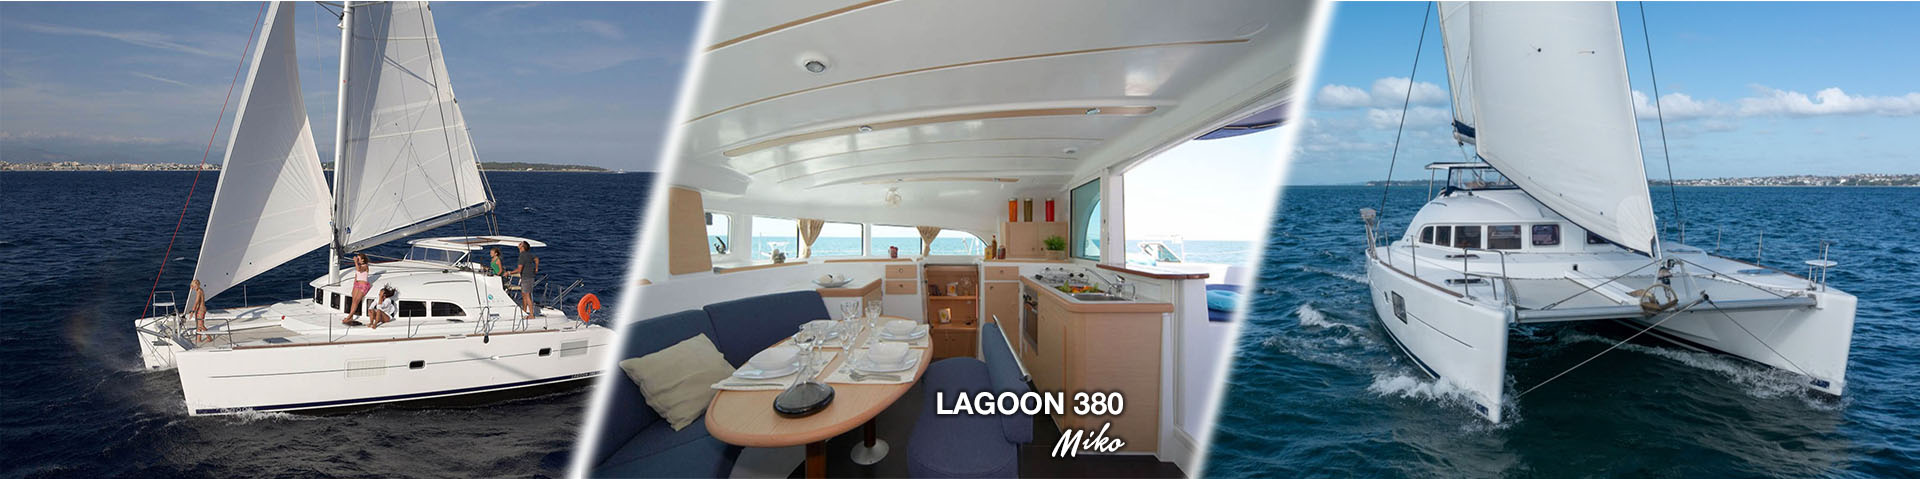 Mico Lagoon 380 Yacht Charter